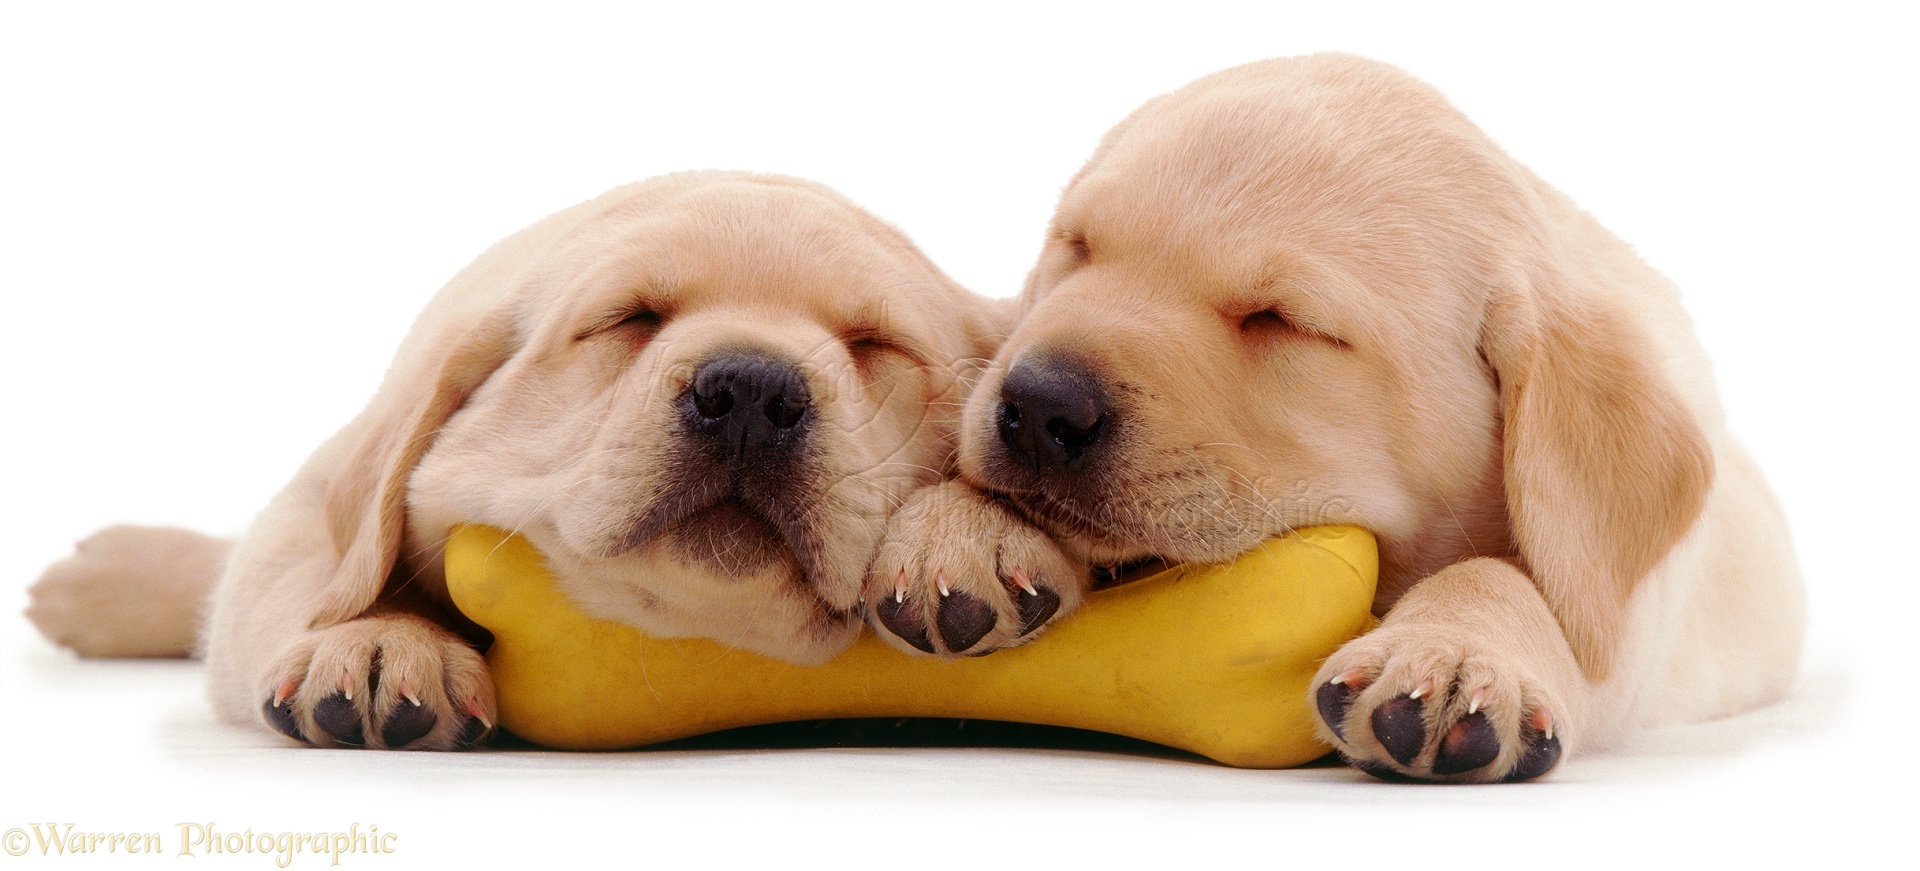 Wp03594 Yellow Labrador Retriever Pups Weeks Old Asleep On Their